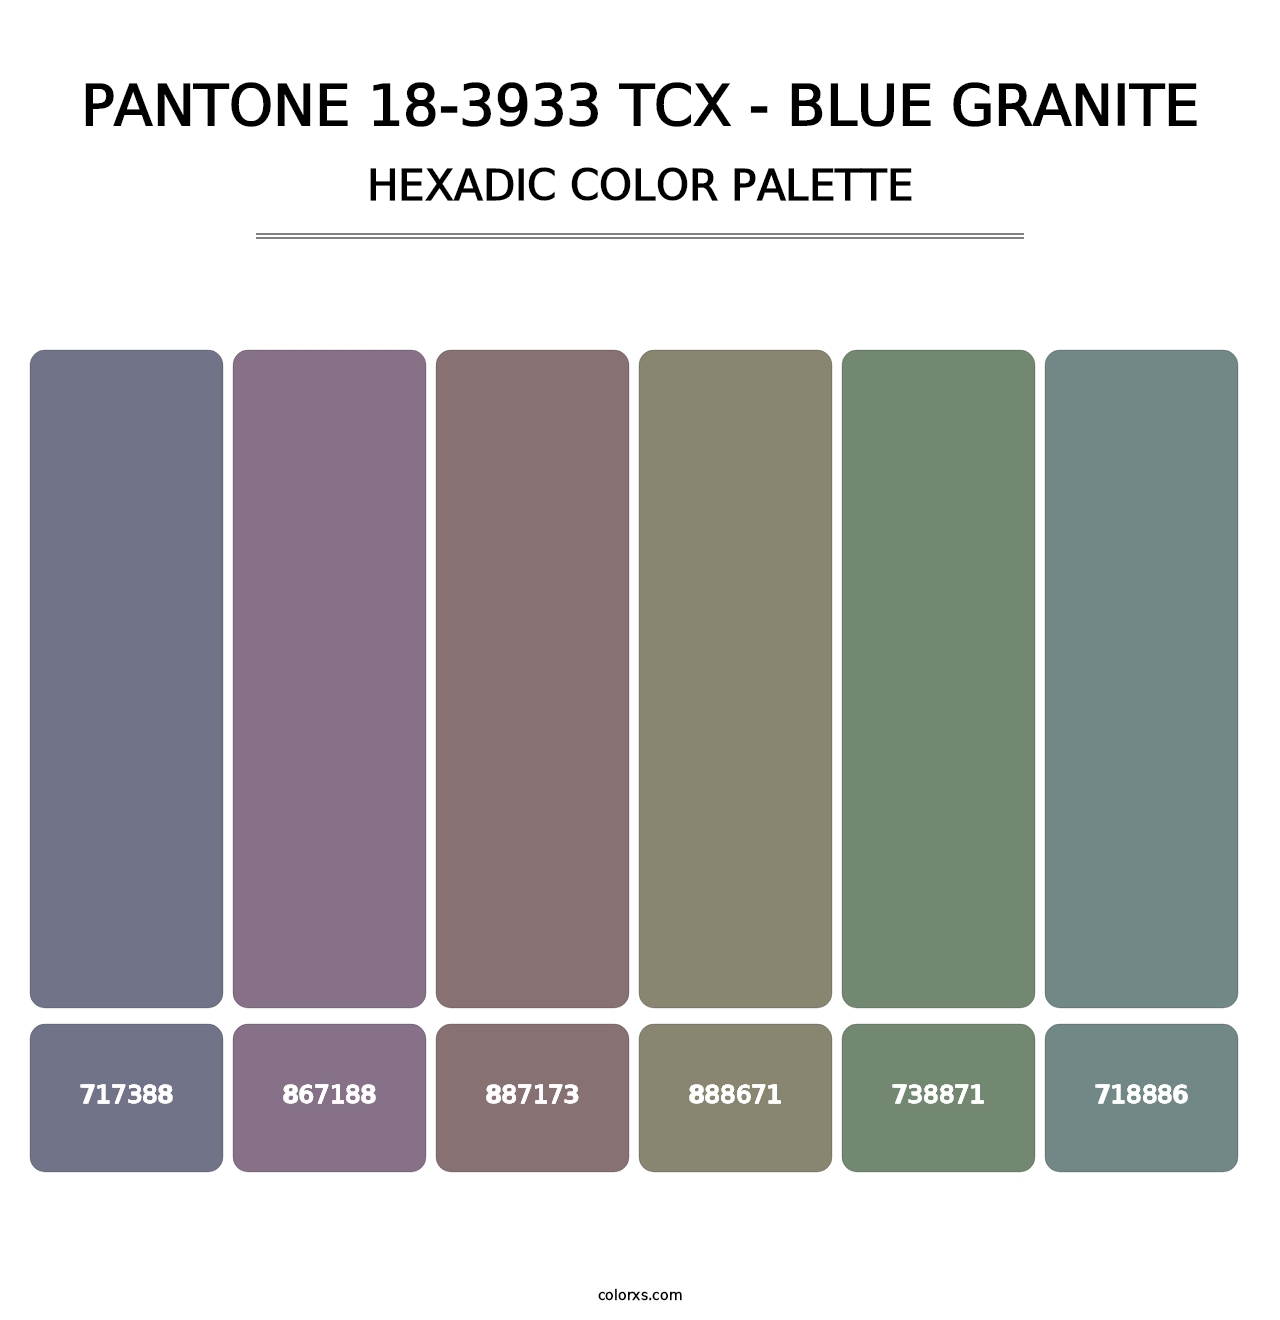 PANTONE 18-3933 TCX - Blue Granite - Hexadic Color Palette